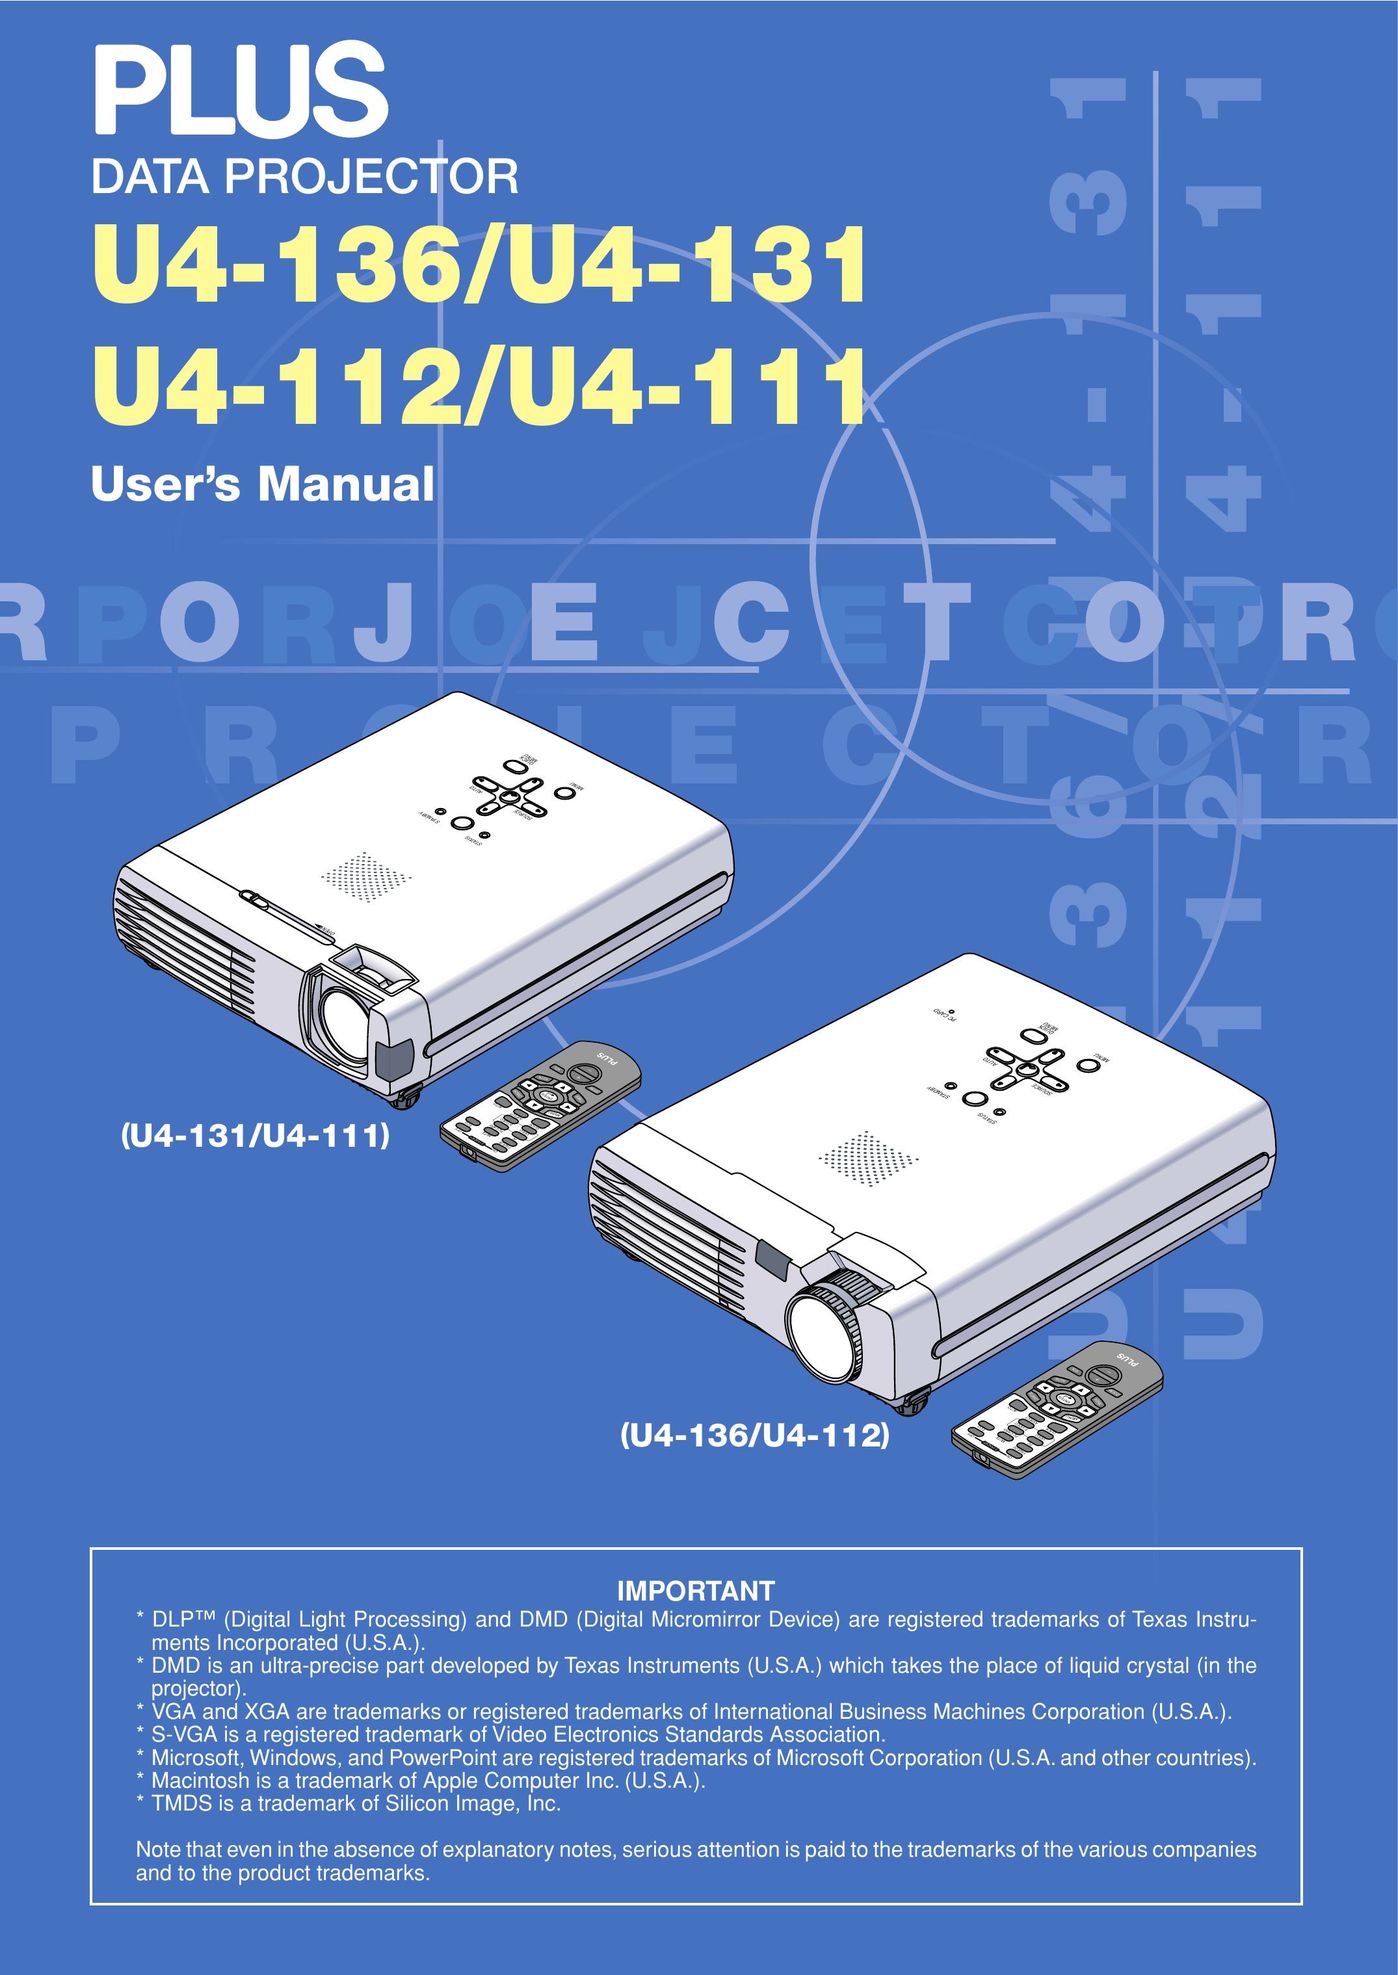 PLUS Vision U4-112/U4-111 Projector User Manual